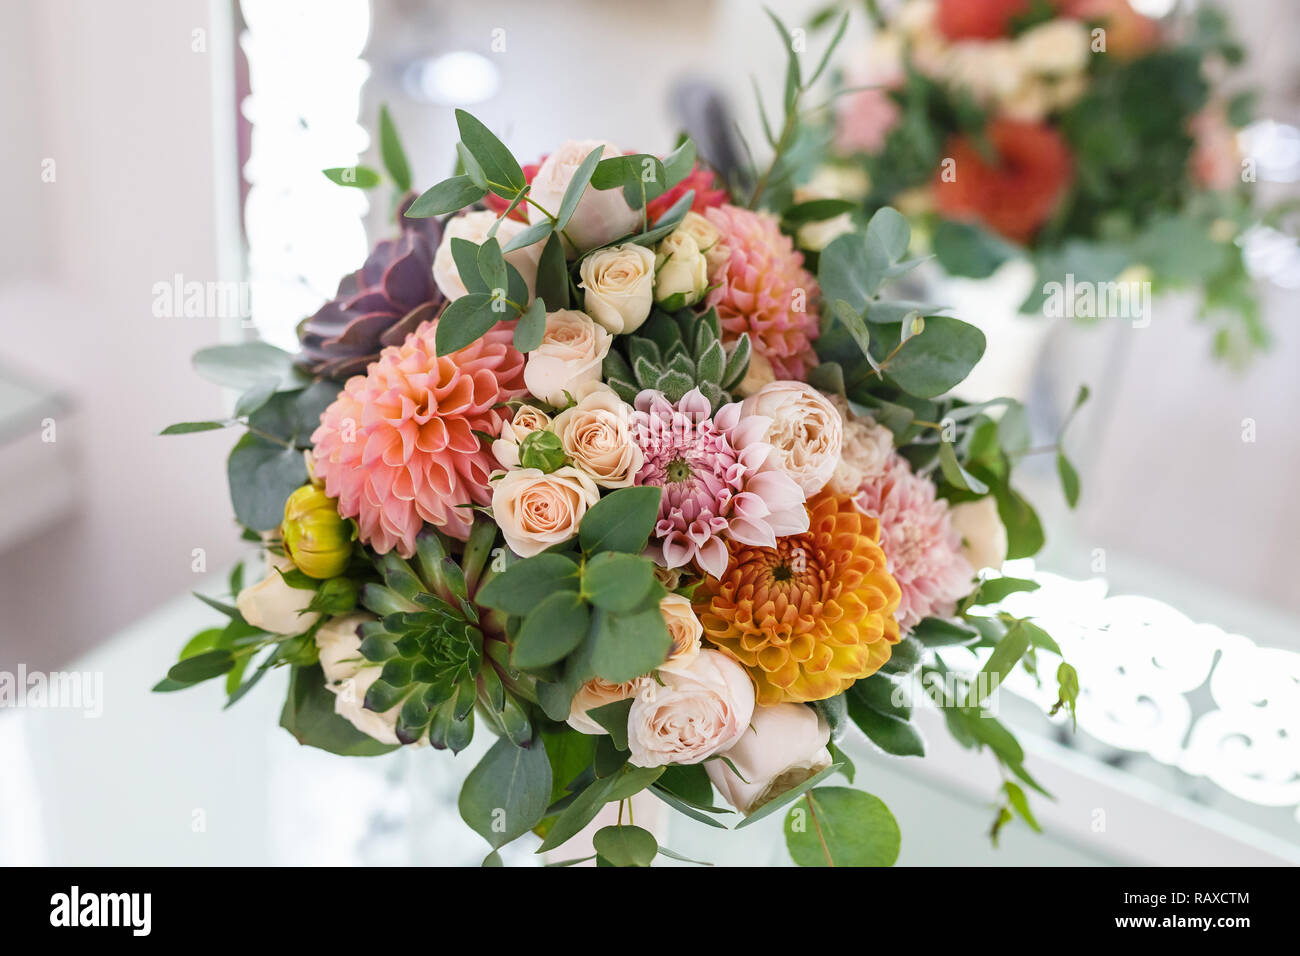 Brillante Bouquet nozze d'estate dalie e rose Foto stock - Alamy